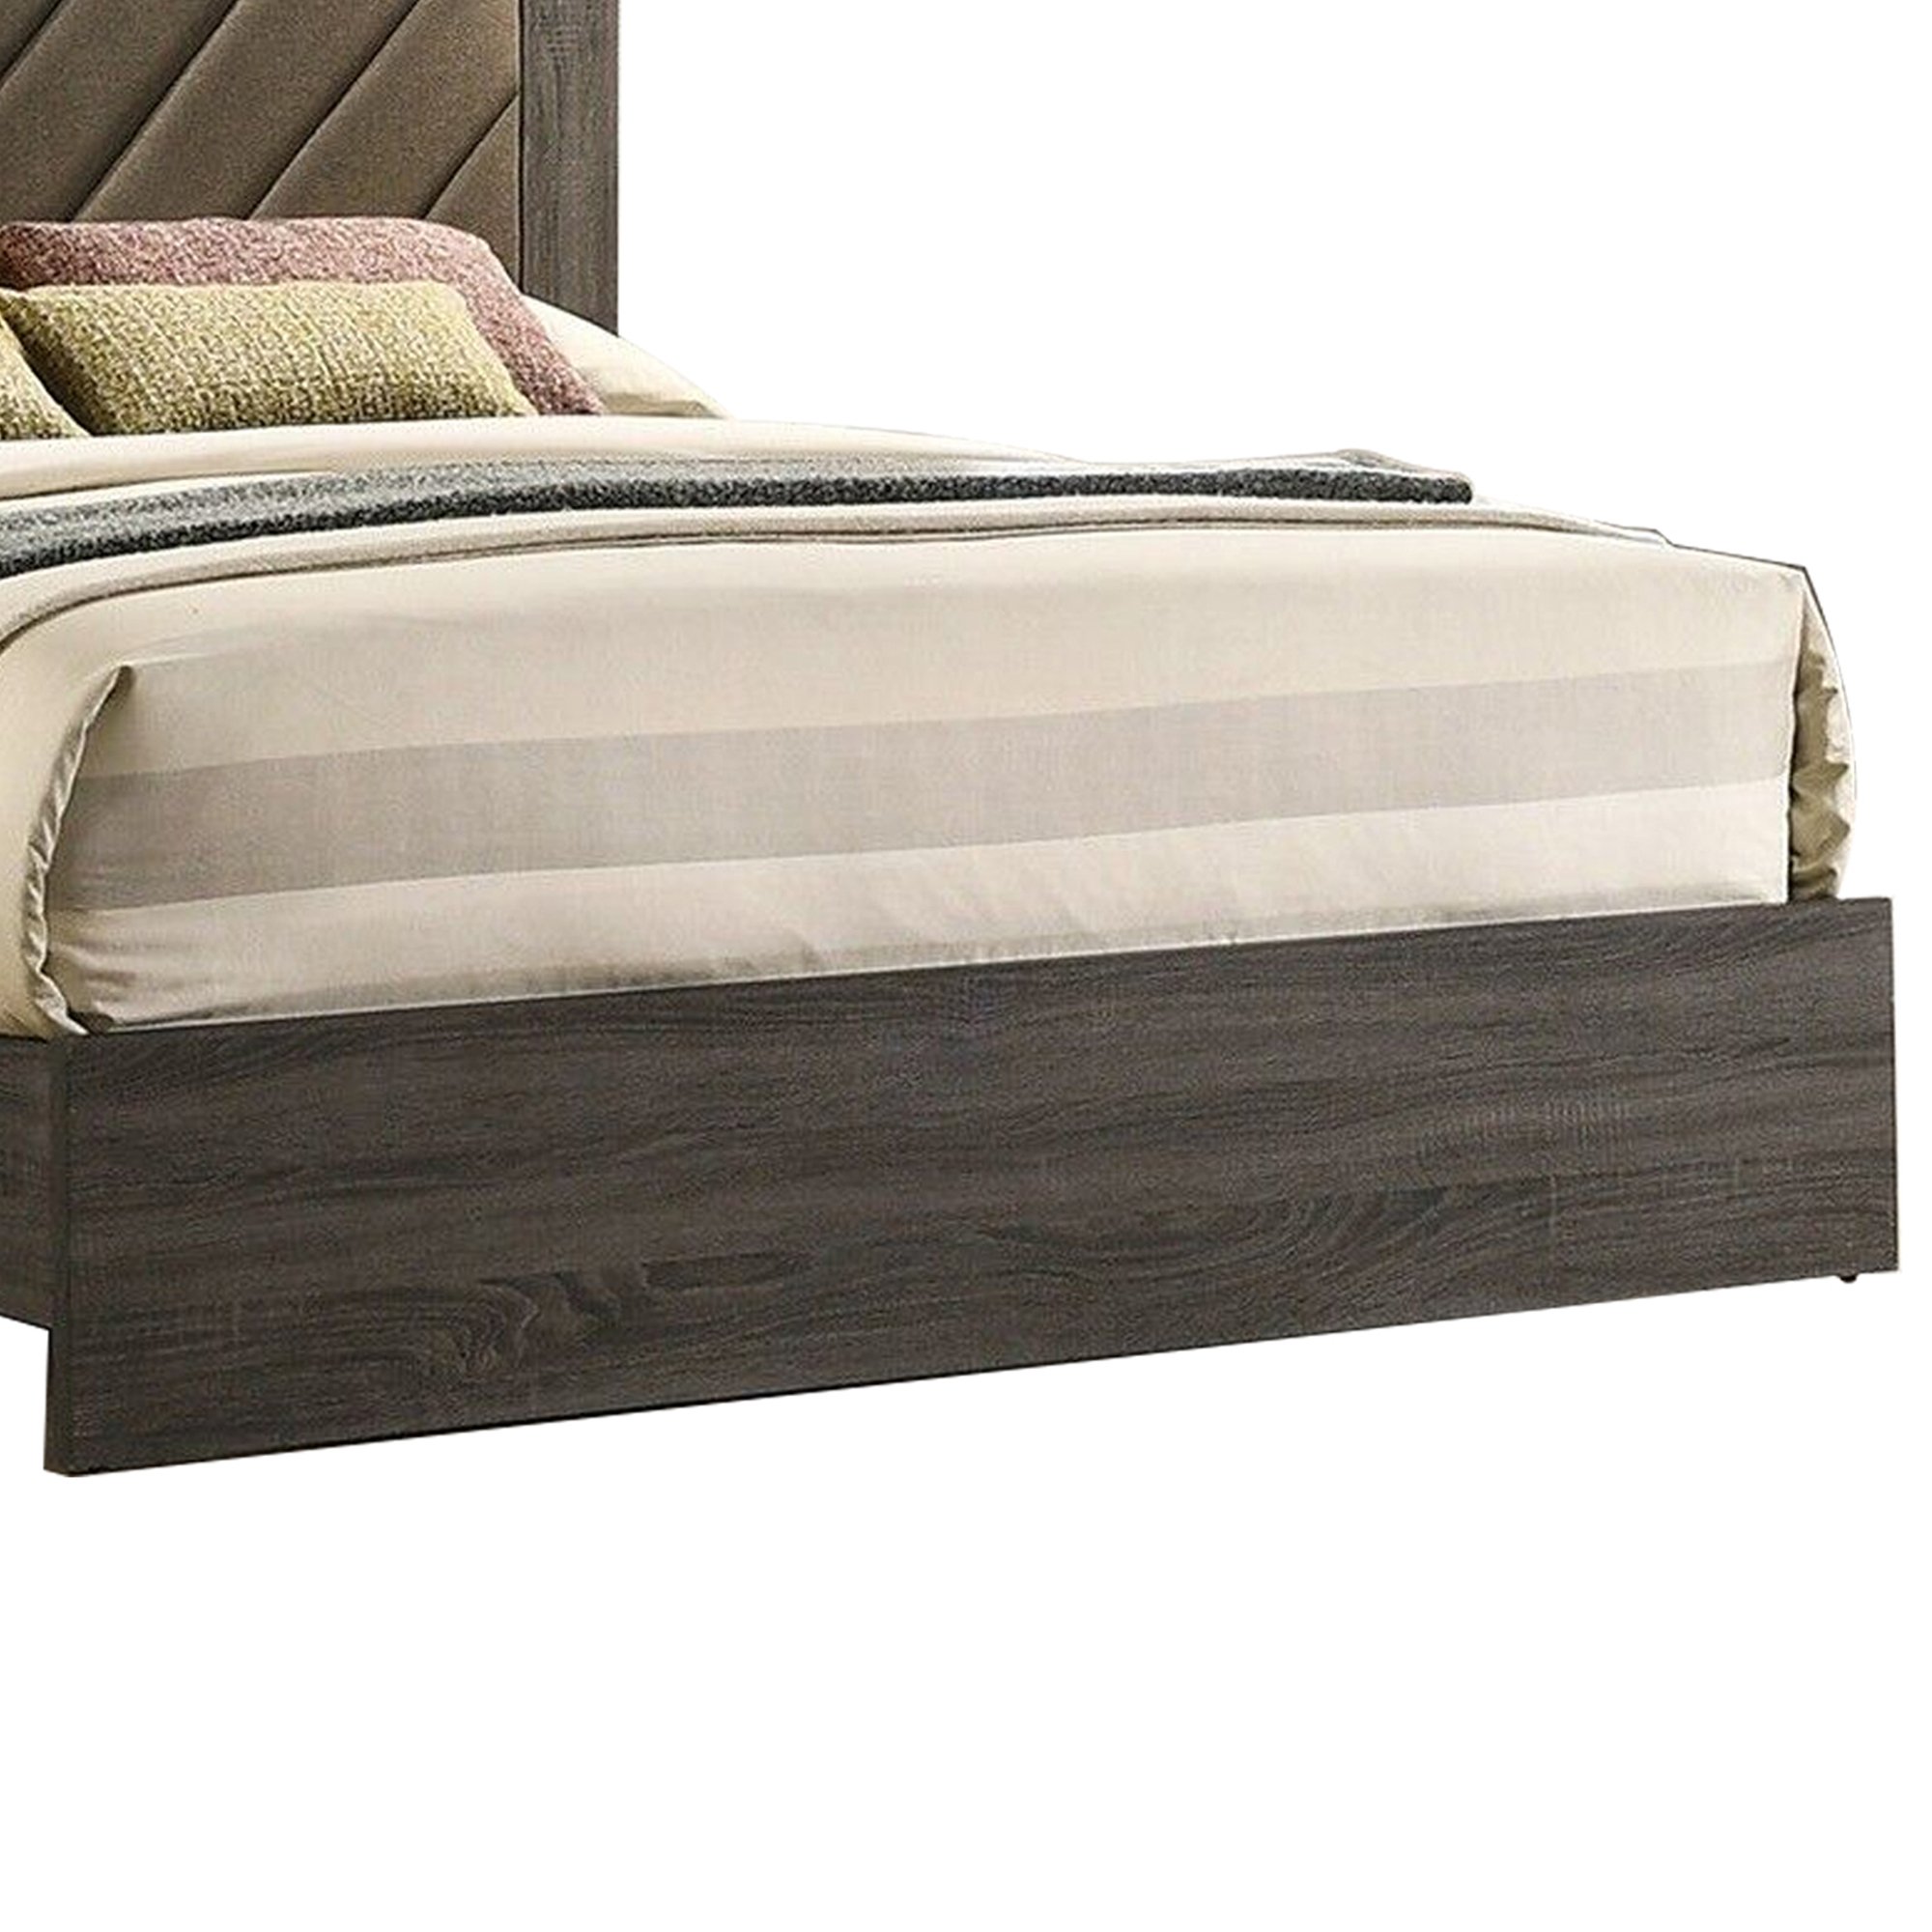 Cato Upholstered Queen Size Bed, Chevron Tufted Brown Headboard, Dark Gray - Saltoro Sherpi